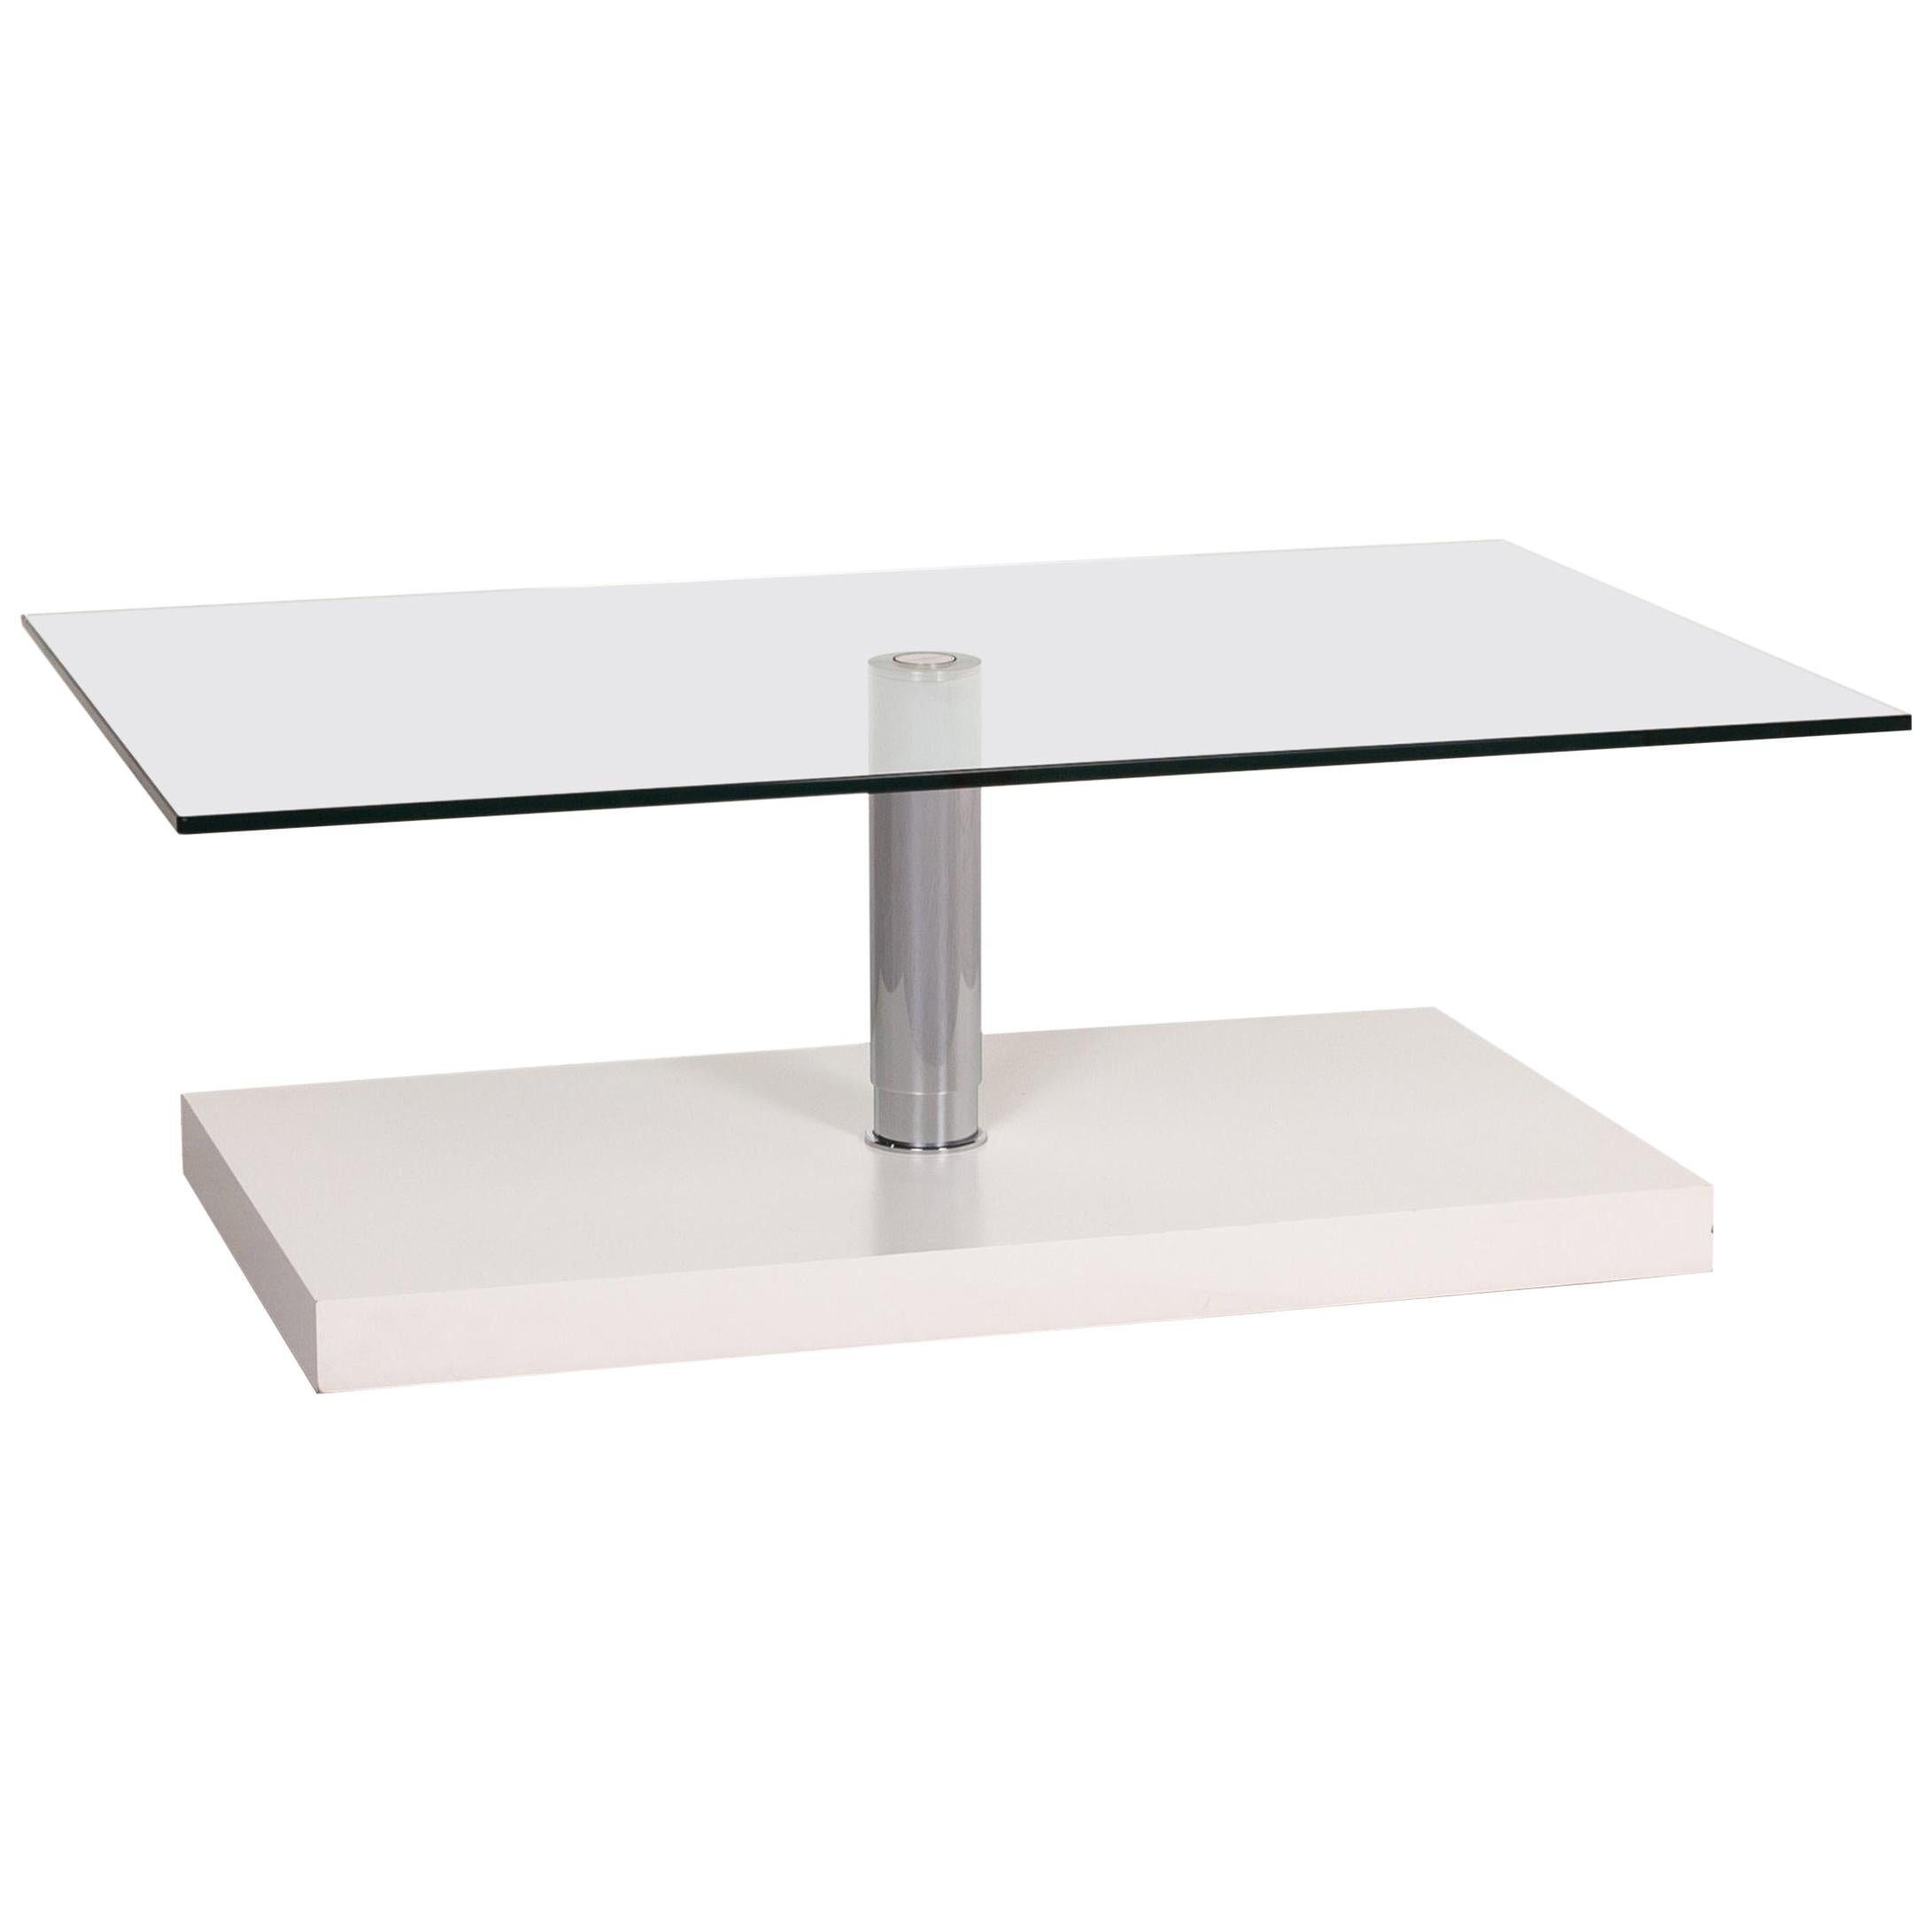 Ronald Schmitt K 436 Glass Coffee Table White Table